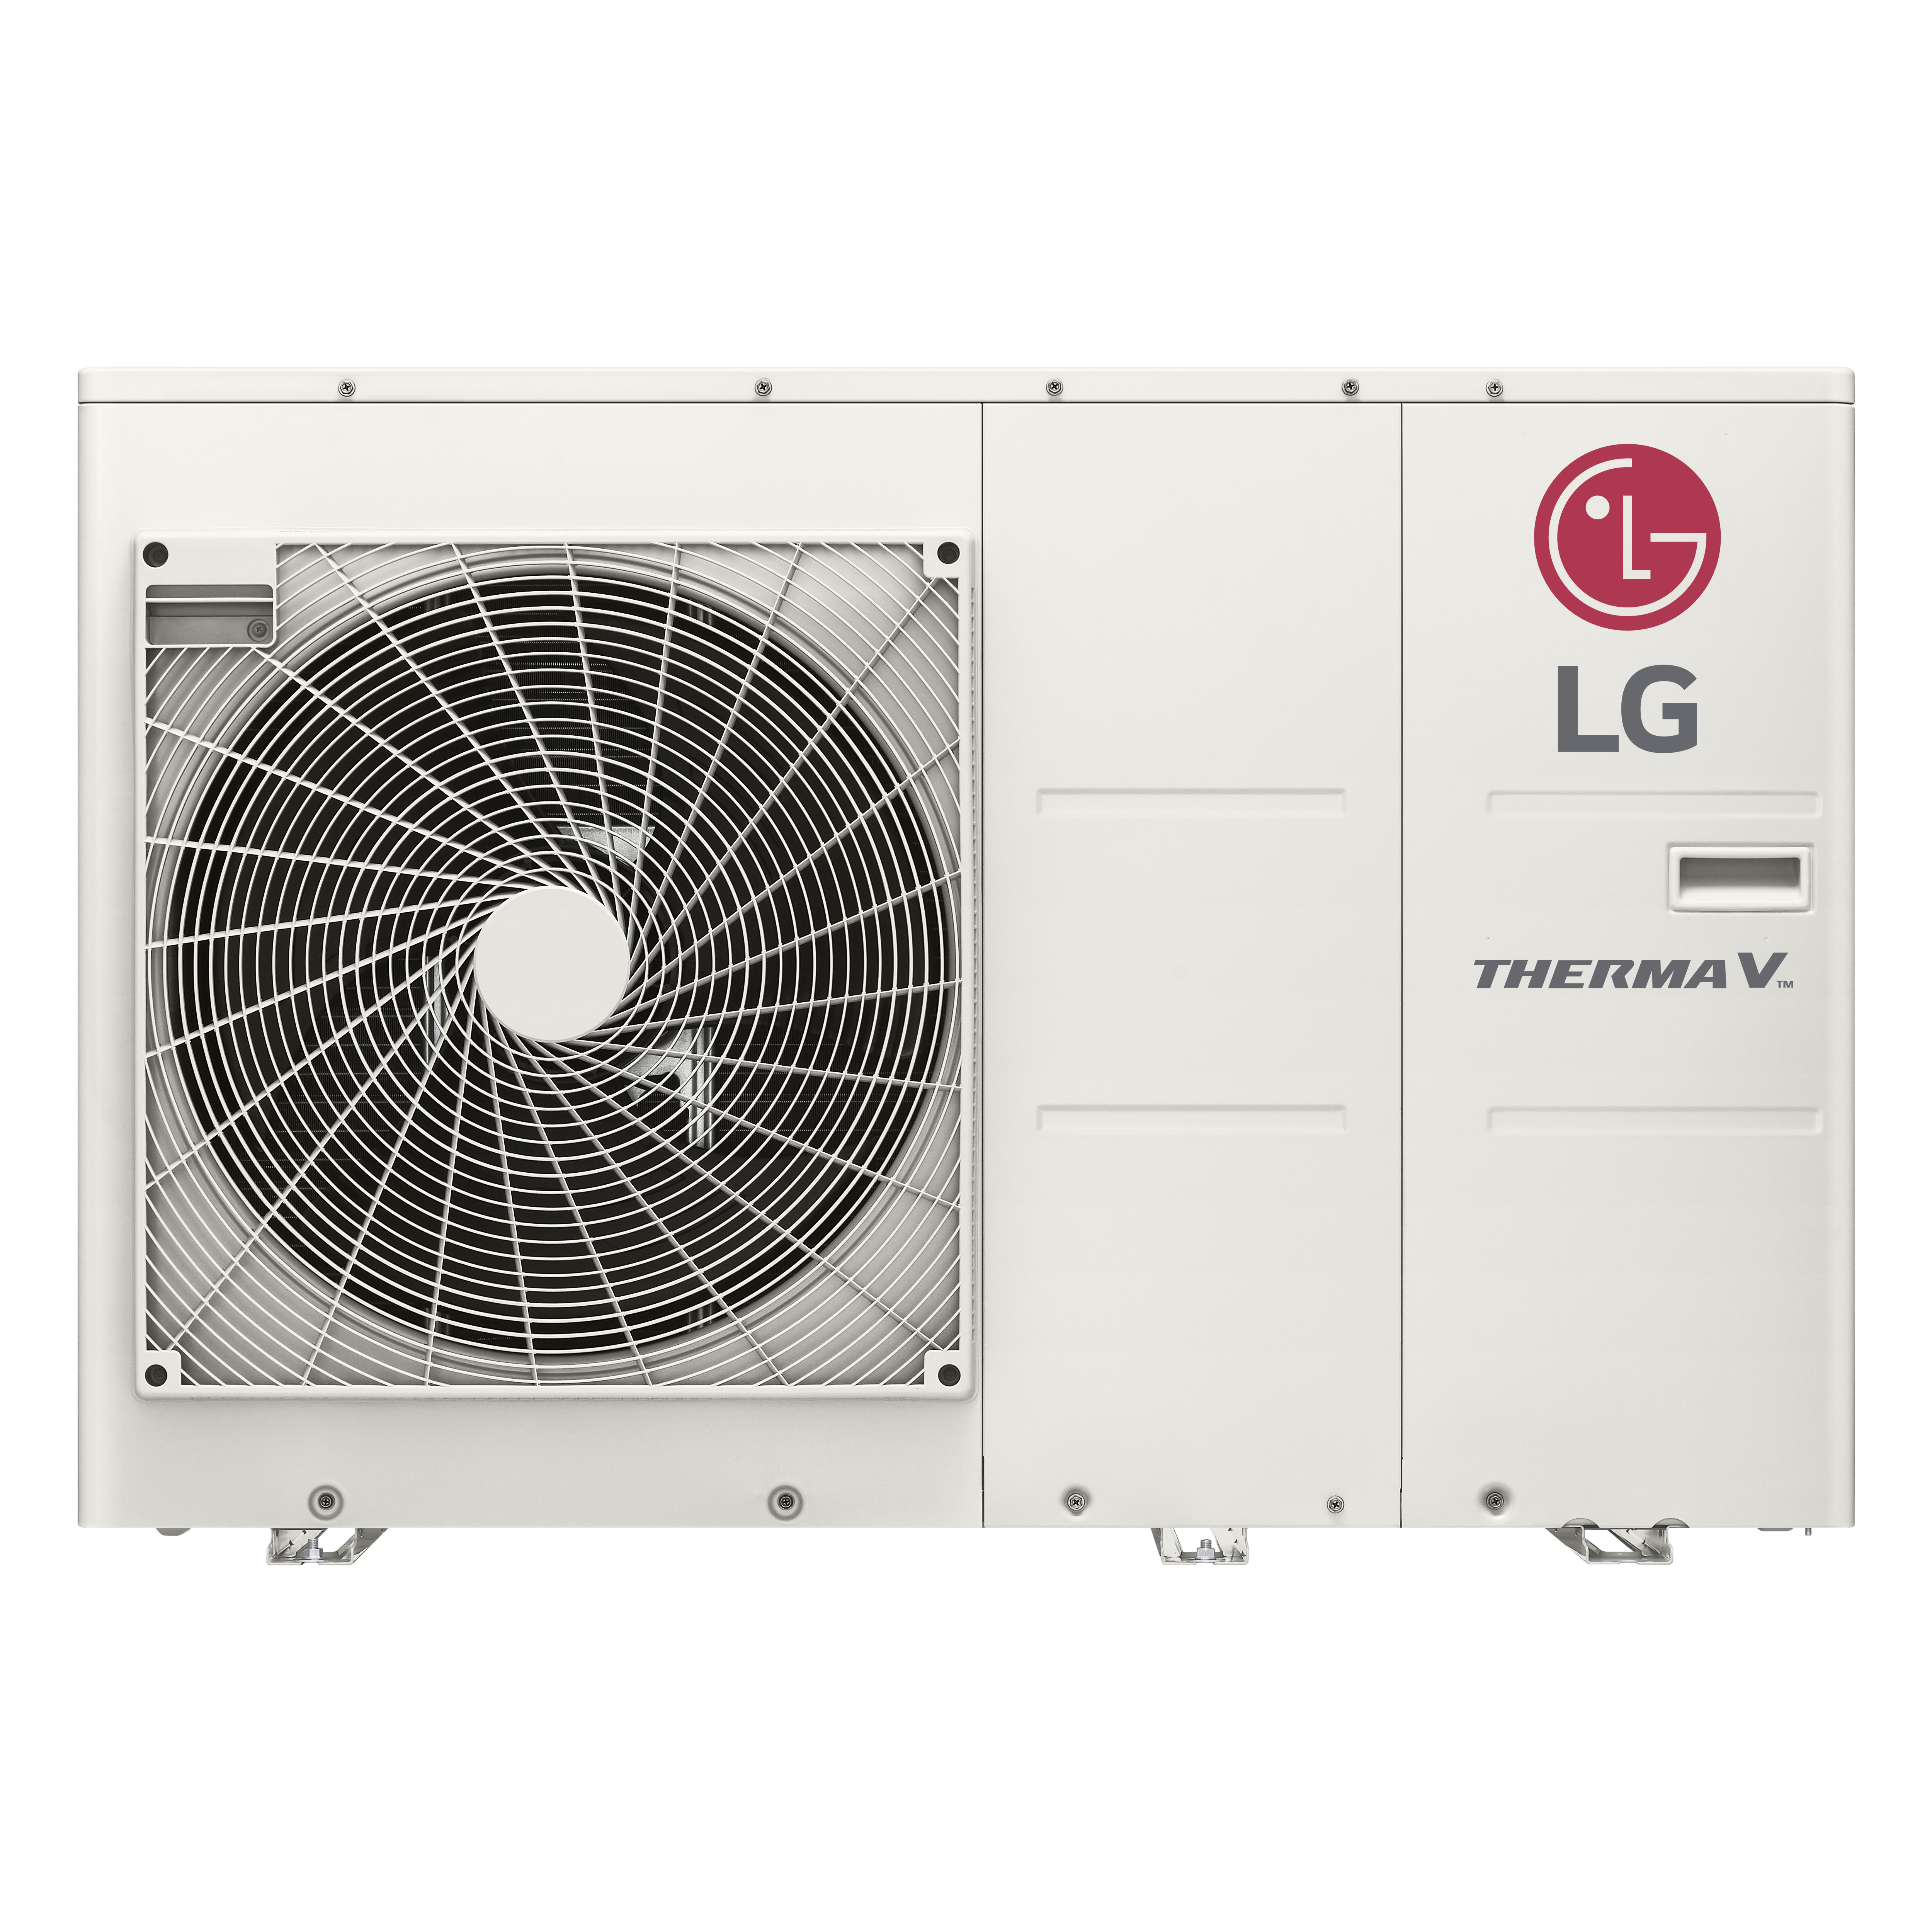 LG THERMA V R32 Monobloc S Luft/Wasser-Wärmepumpe 7 kW inkl. Heizstab